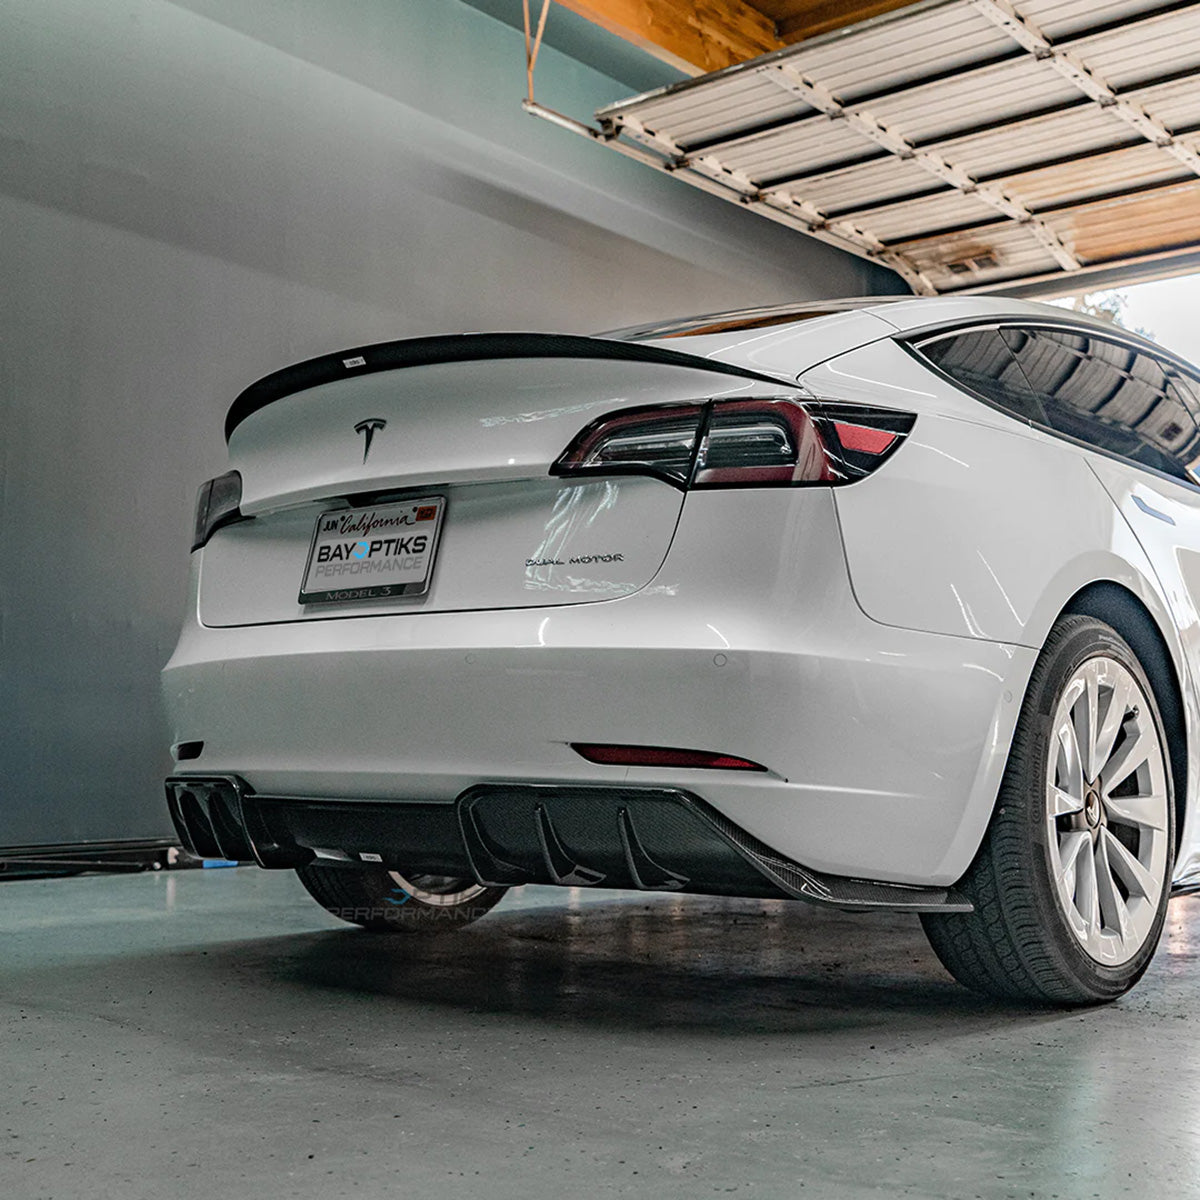 Adro Tesla Model 3 Premium Prepeg Carbon Fiber Spoiler